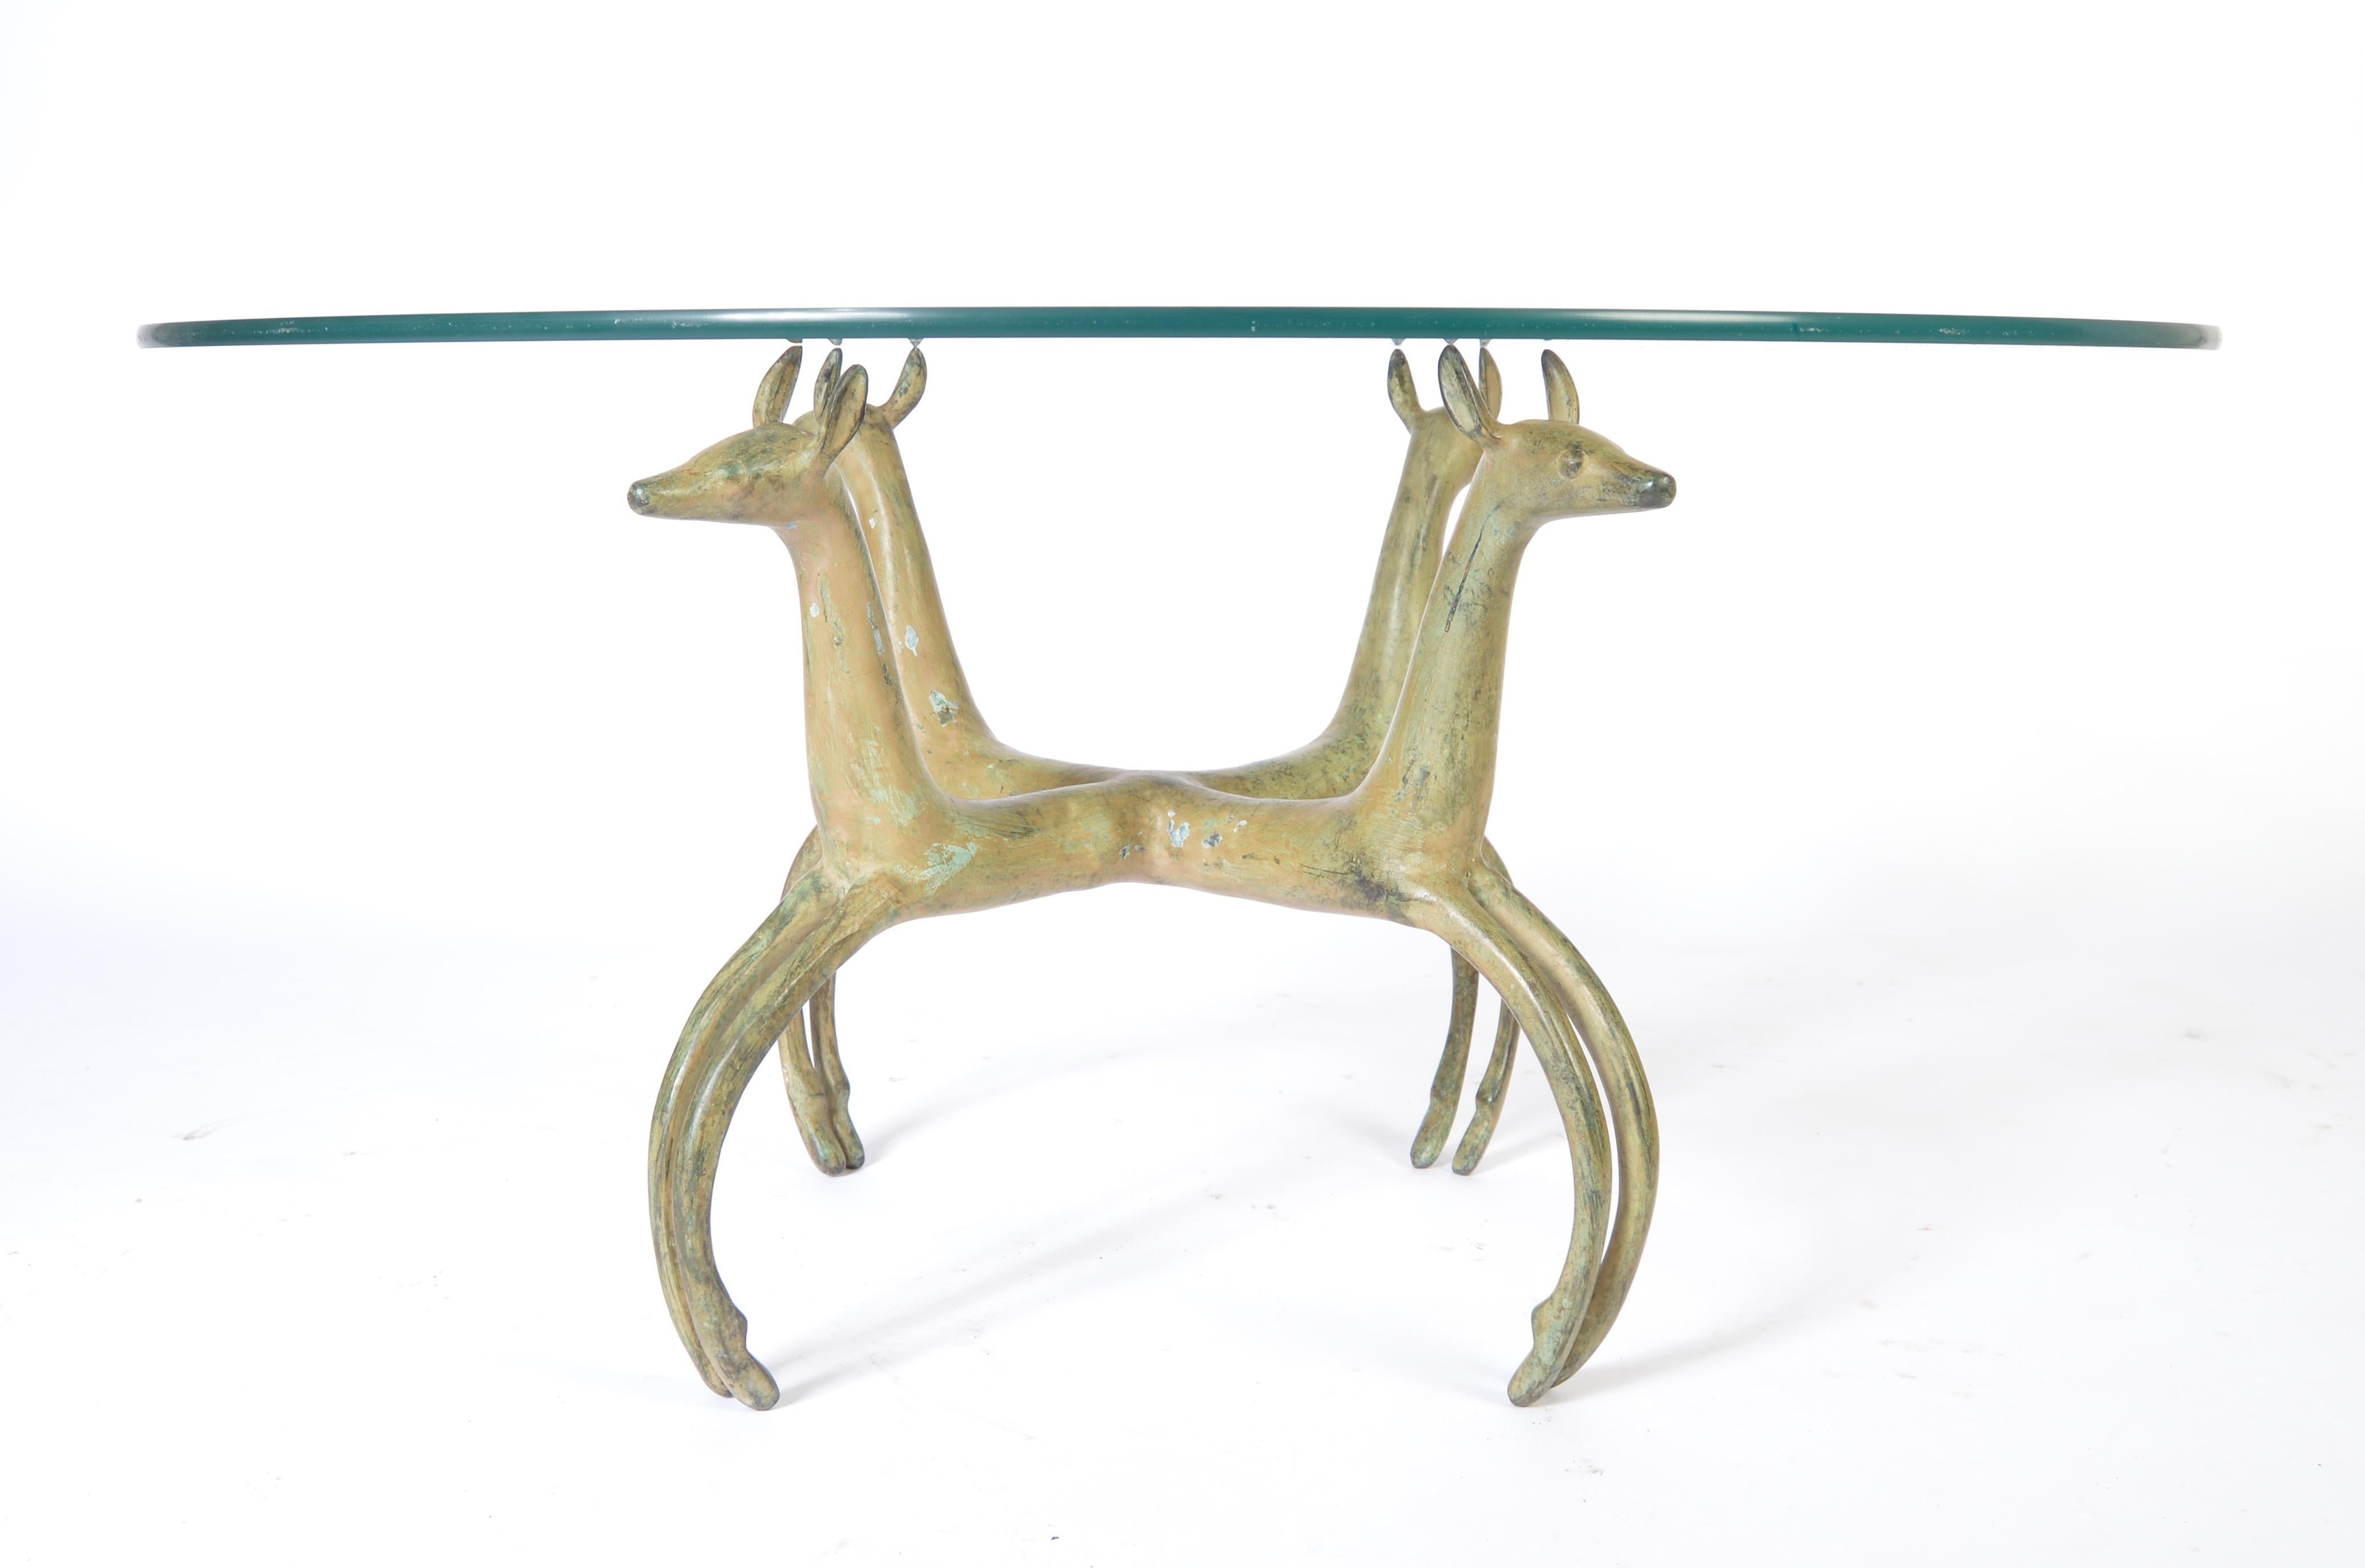 Bronze sculpture base of four deer set beneath a glass top.
Measures: Sculpture width is 24